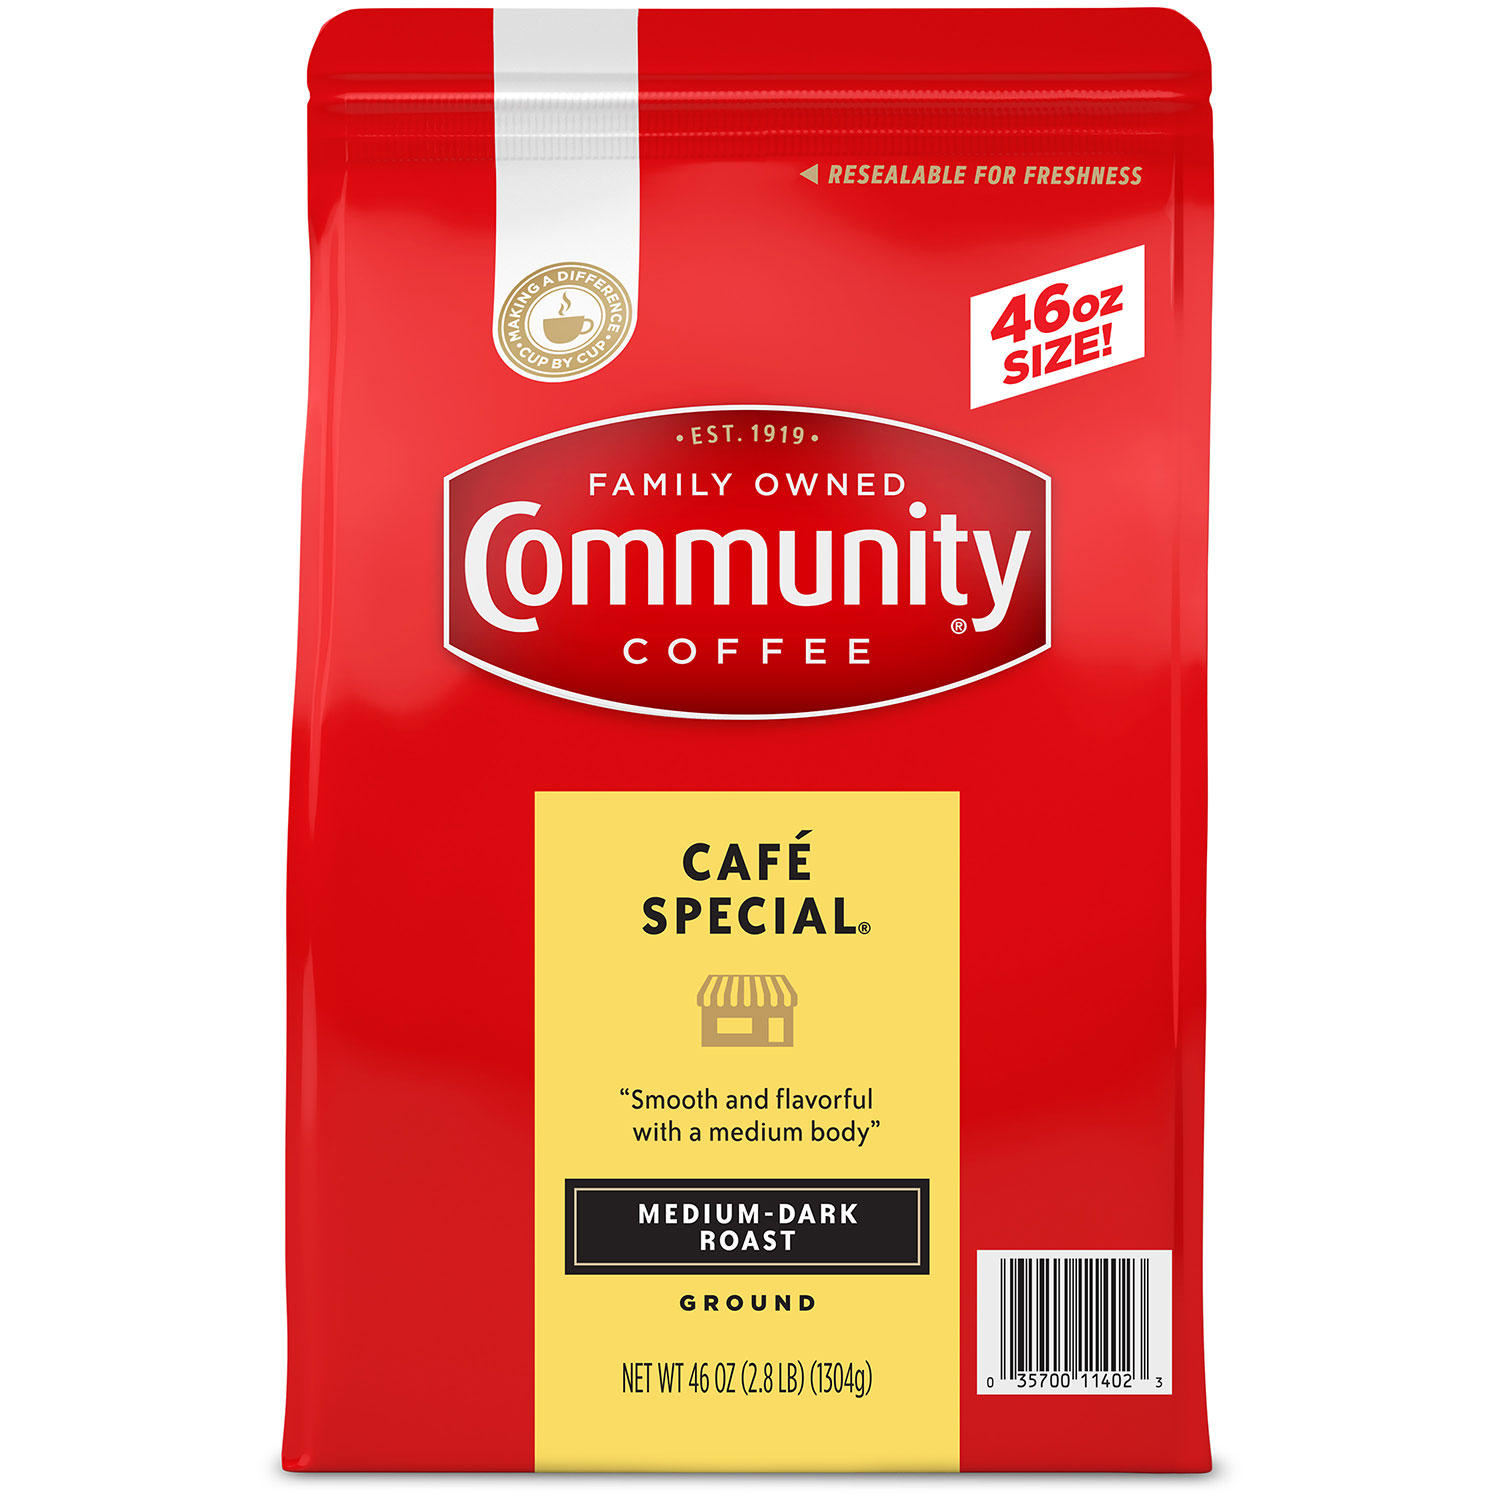 Community Coffee Caf? Special Med-Dark Roast Ground 46 oz Bag